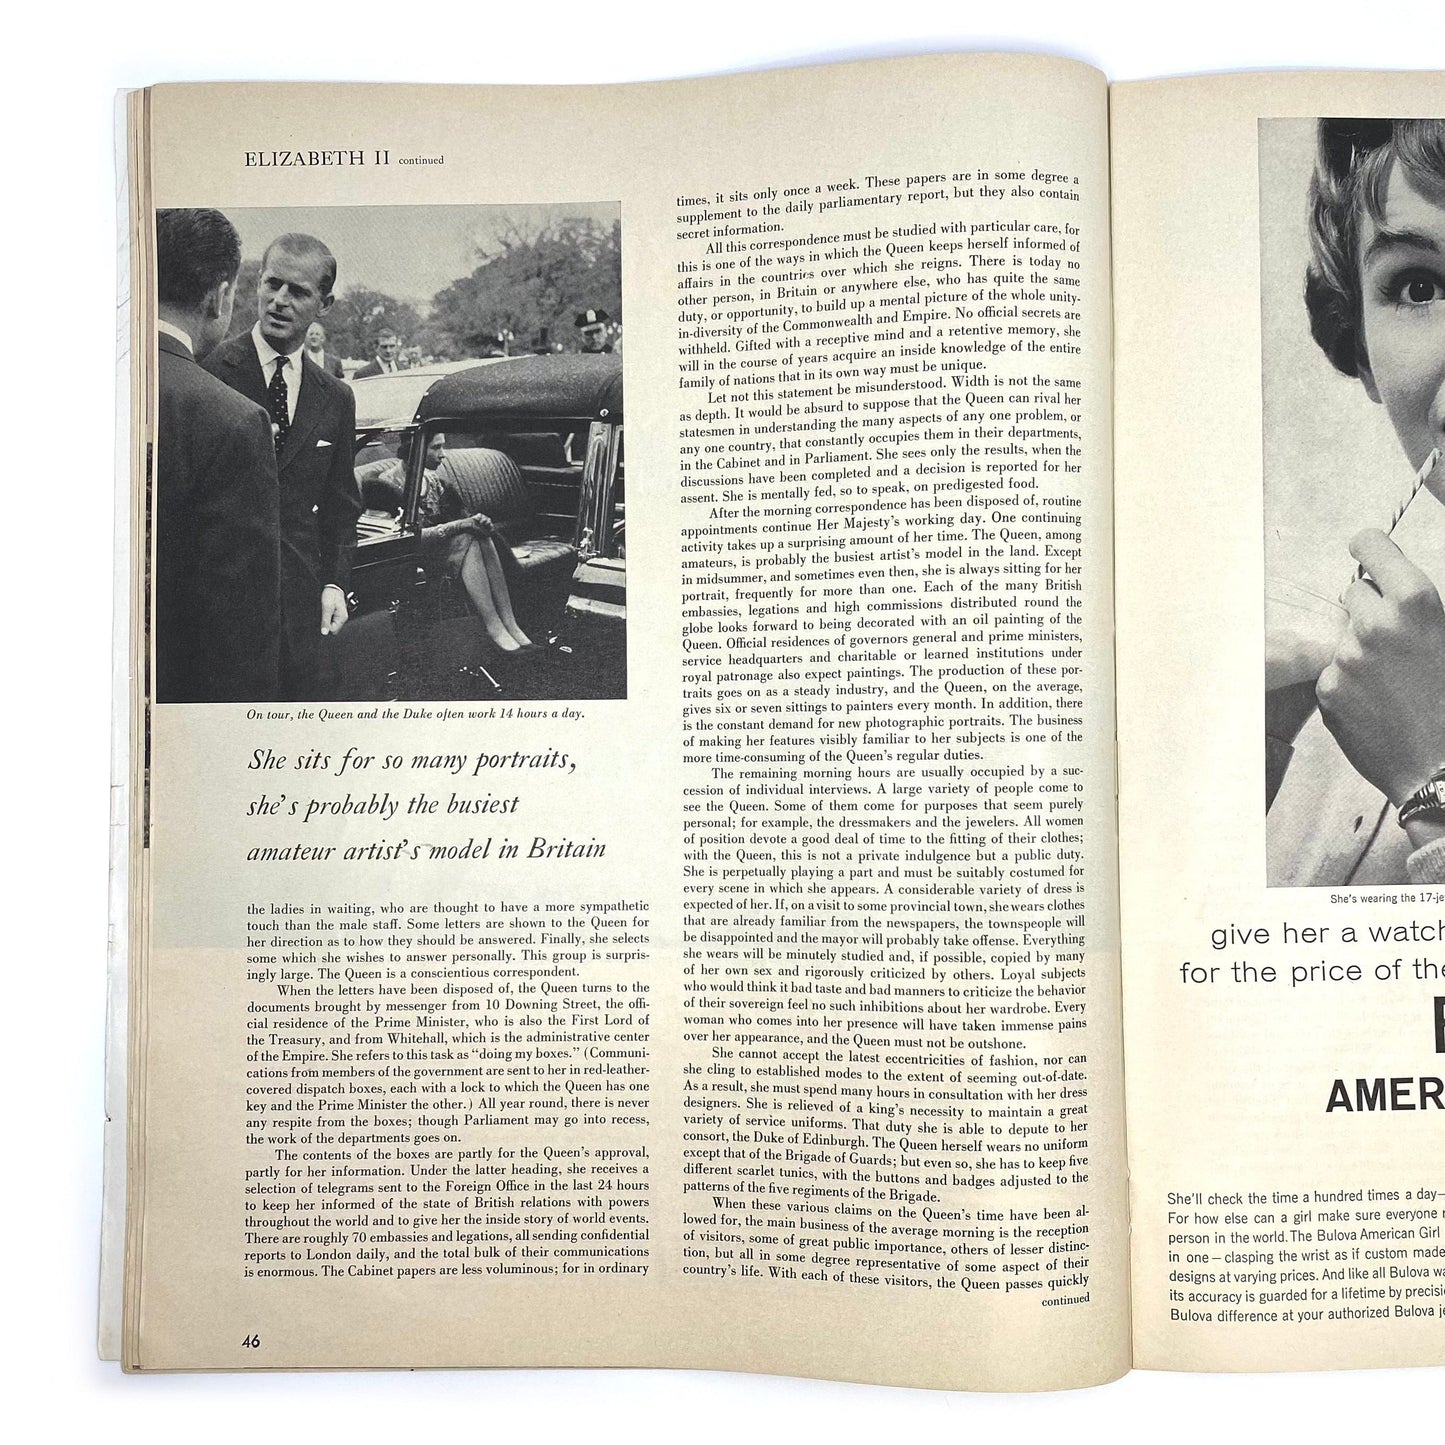 Vintage LOOK Magazine “A NEW BOOK CONDENSATION ELIZABETH II HER WORK AND HER WORRIES” - Dec 9, 1958